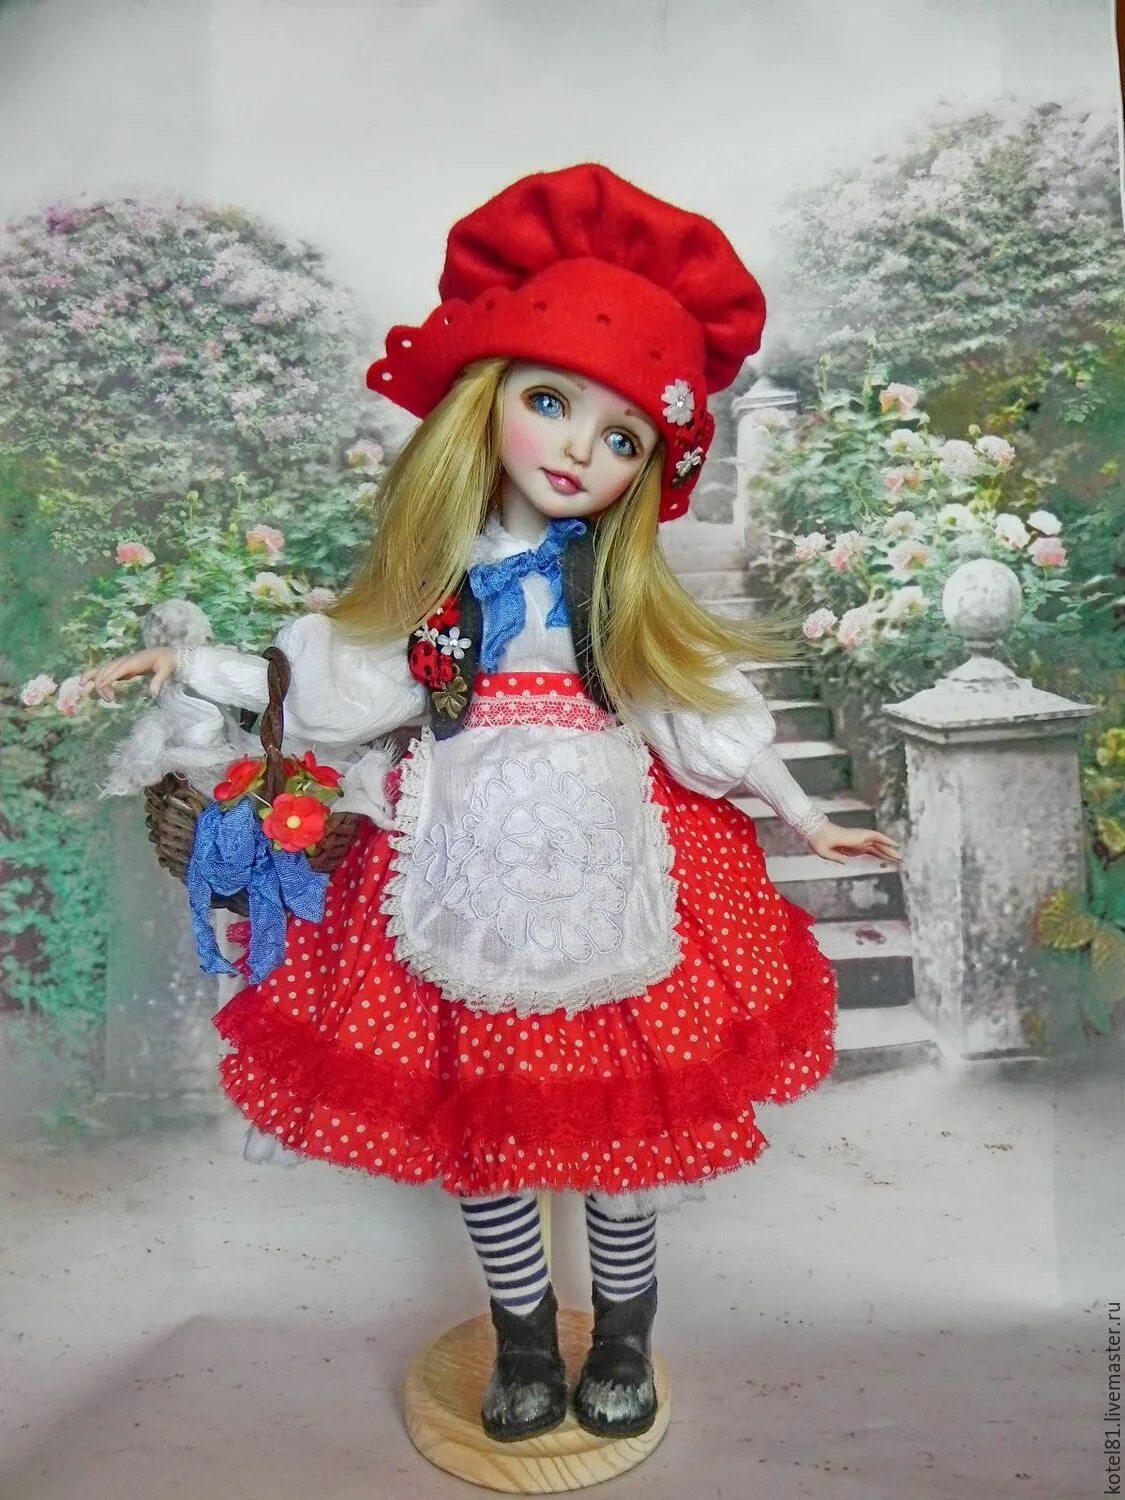 Красные куколки. Красная шапочка Валери кукла. Кукла "красная шапочка №2". Кукла Italocremona красная шапочка. Кукла Эффенби красная шапочка.